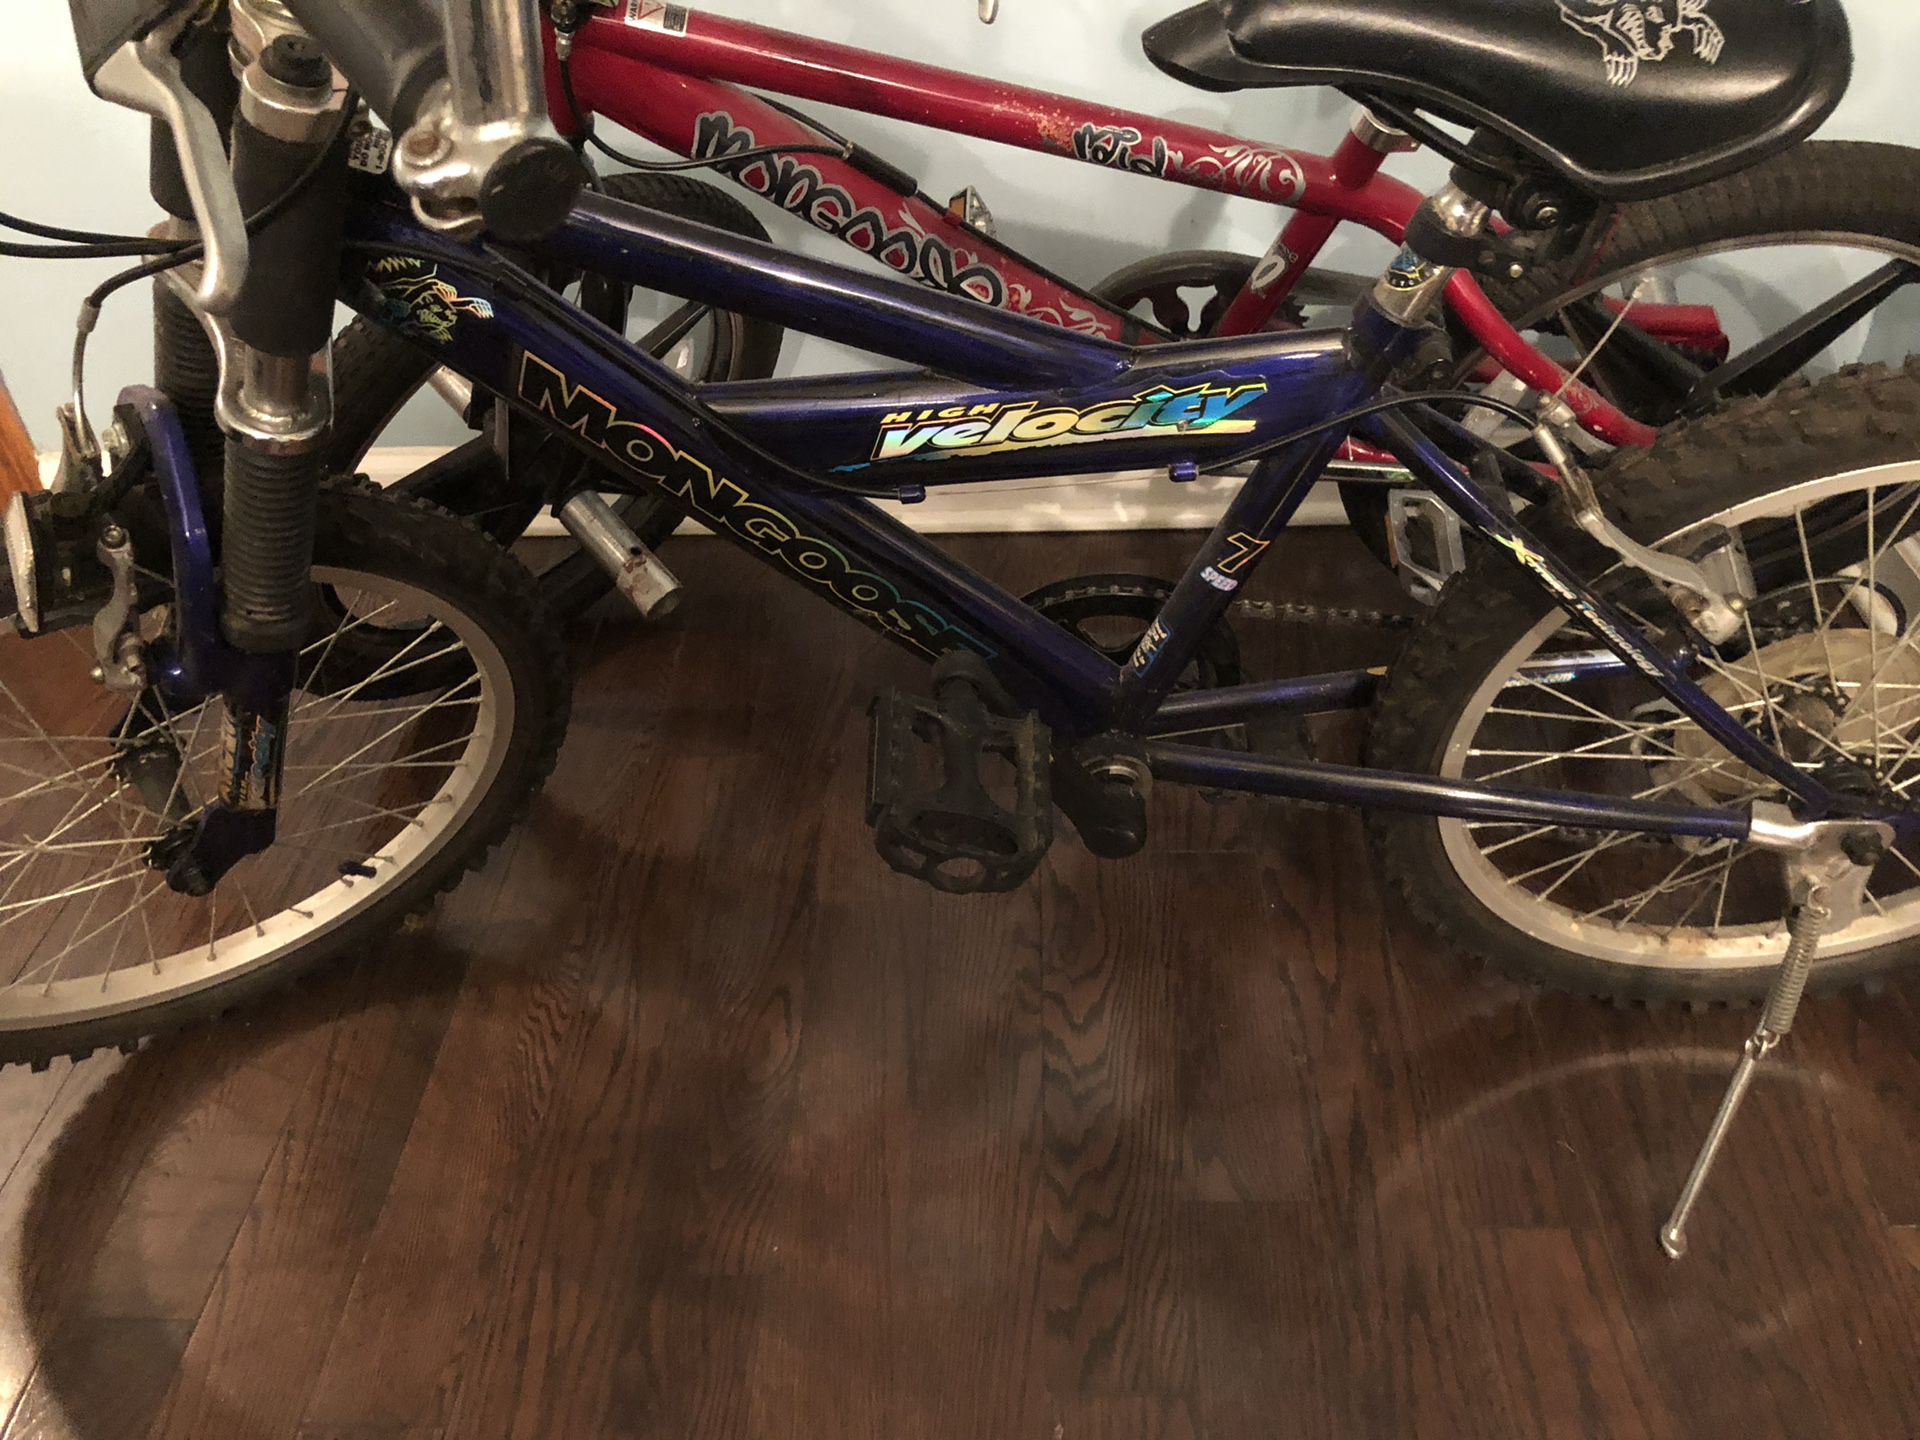 Two mongoose bikes